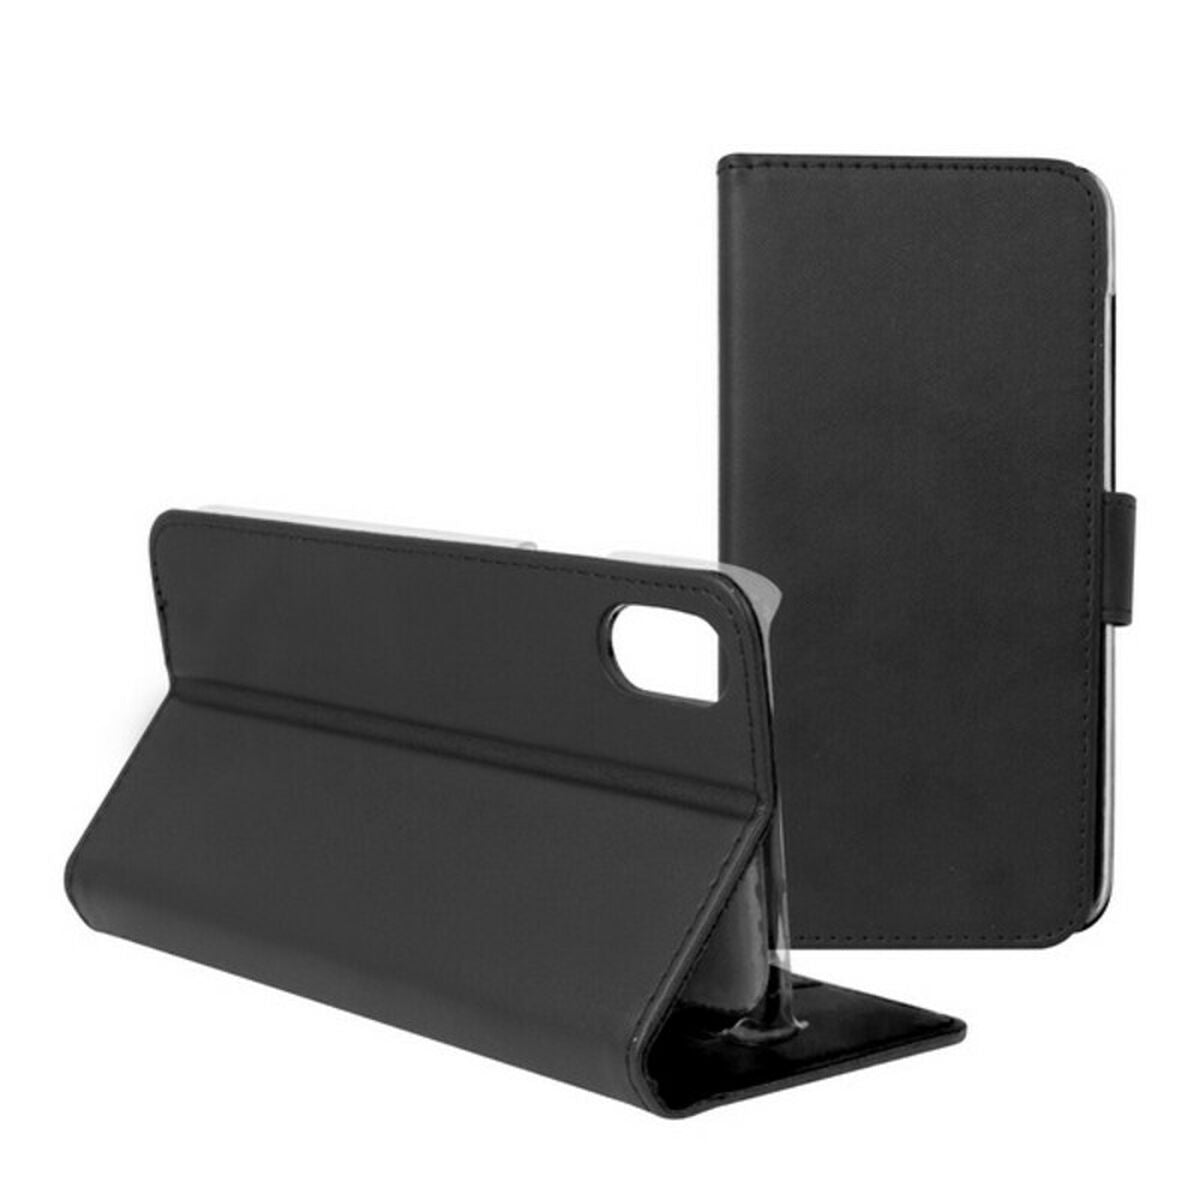 Mobile Cover Case Iphone X Contact Slim Black Textile Polycarbonate